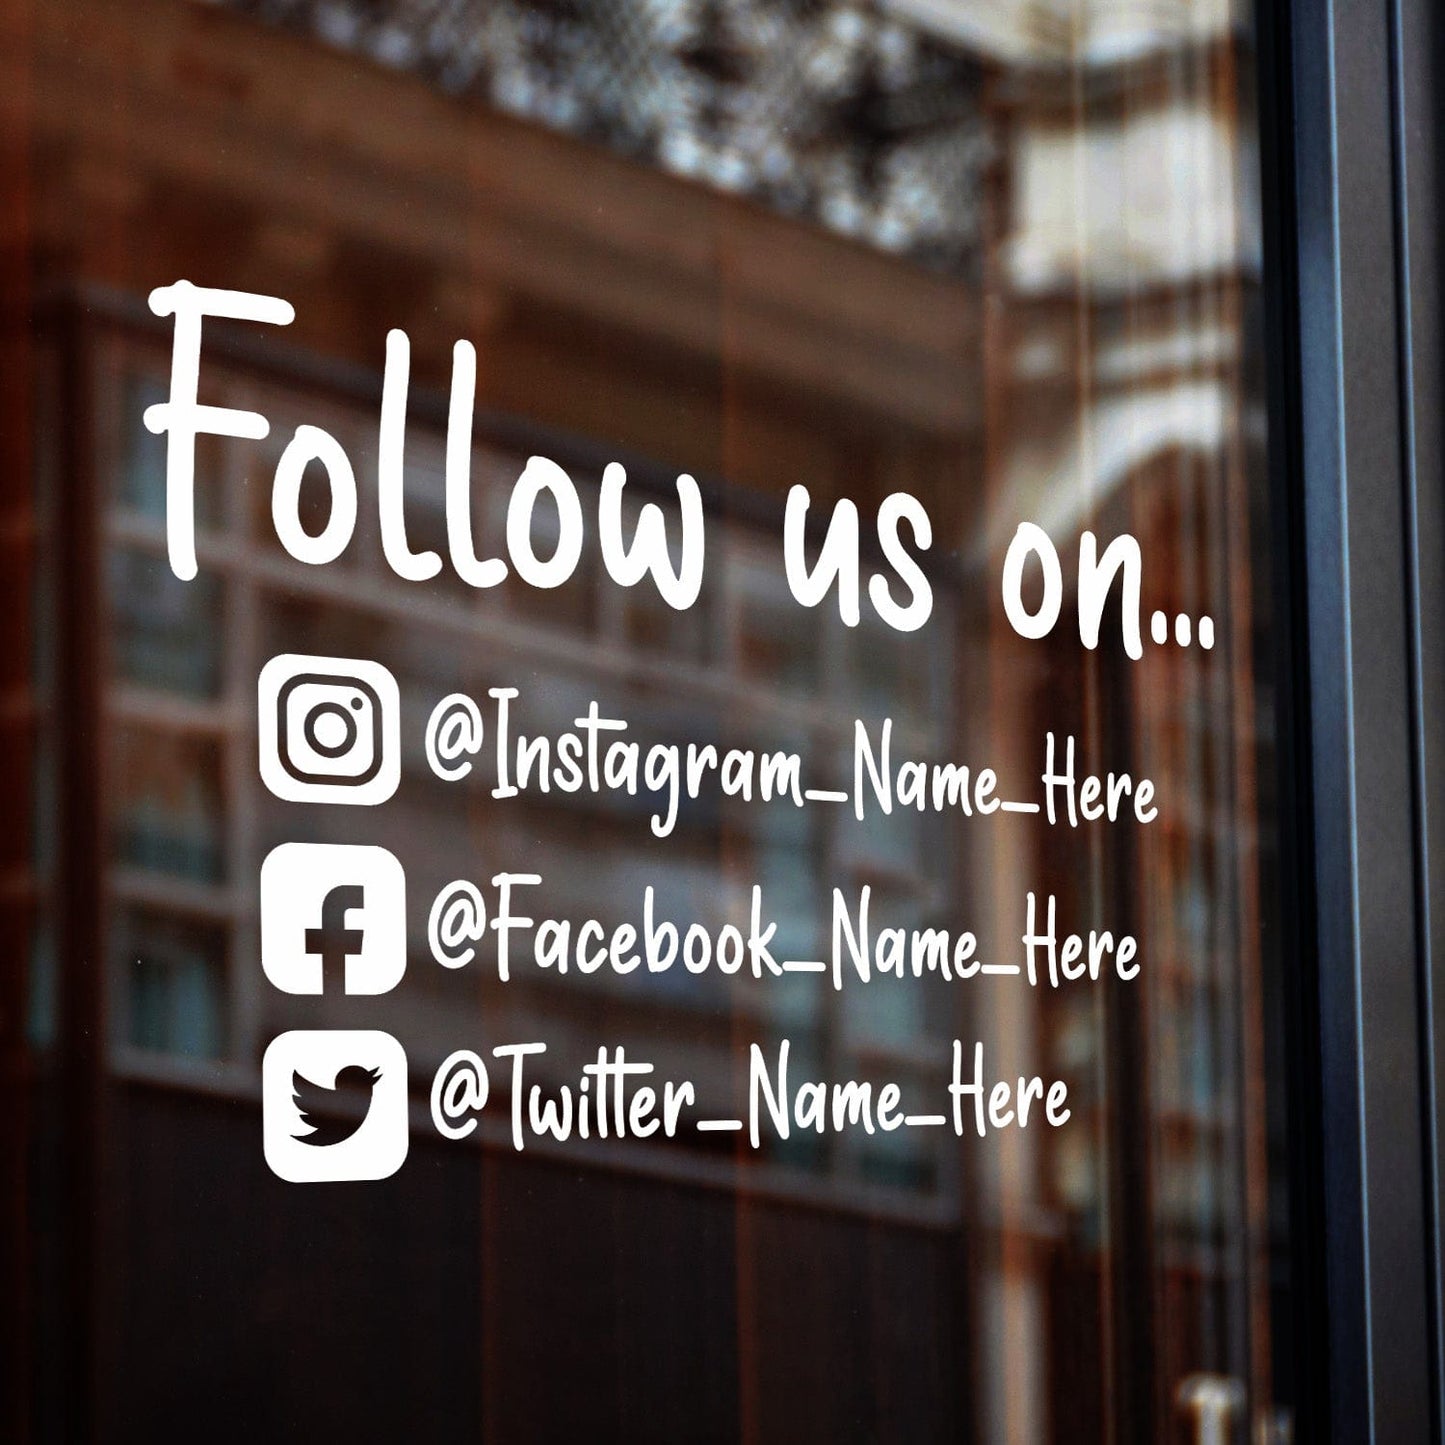 Follow us on - Social Media Signage